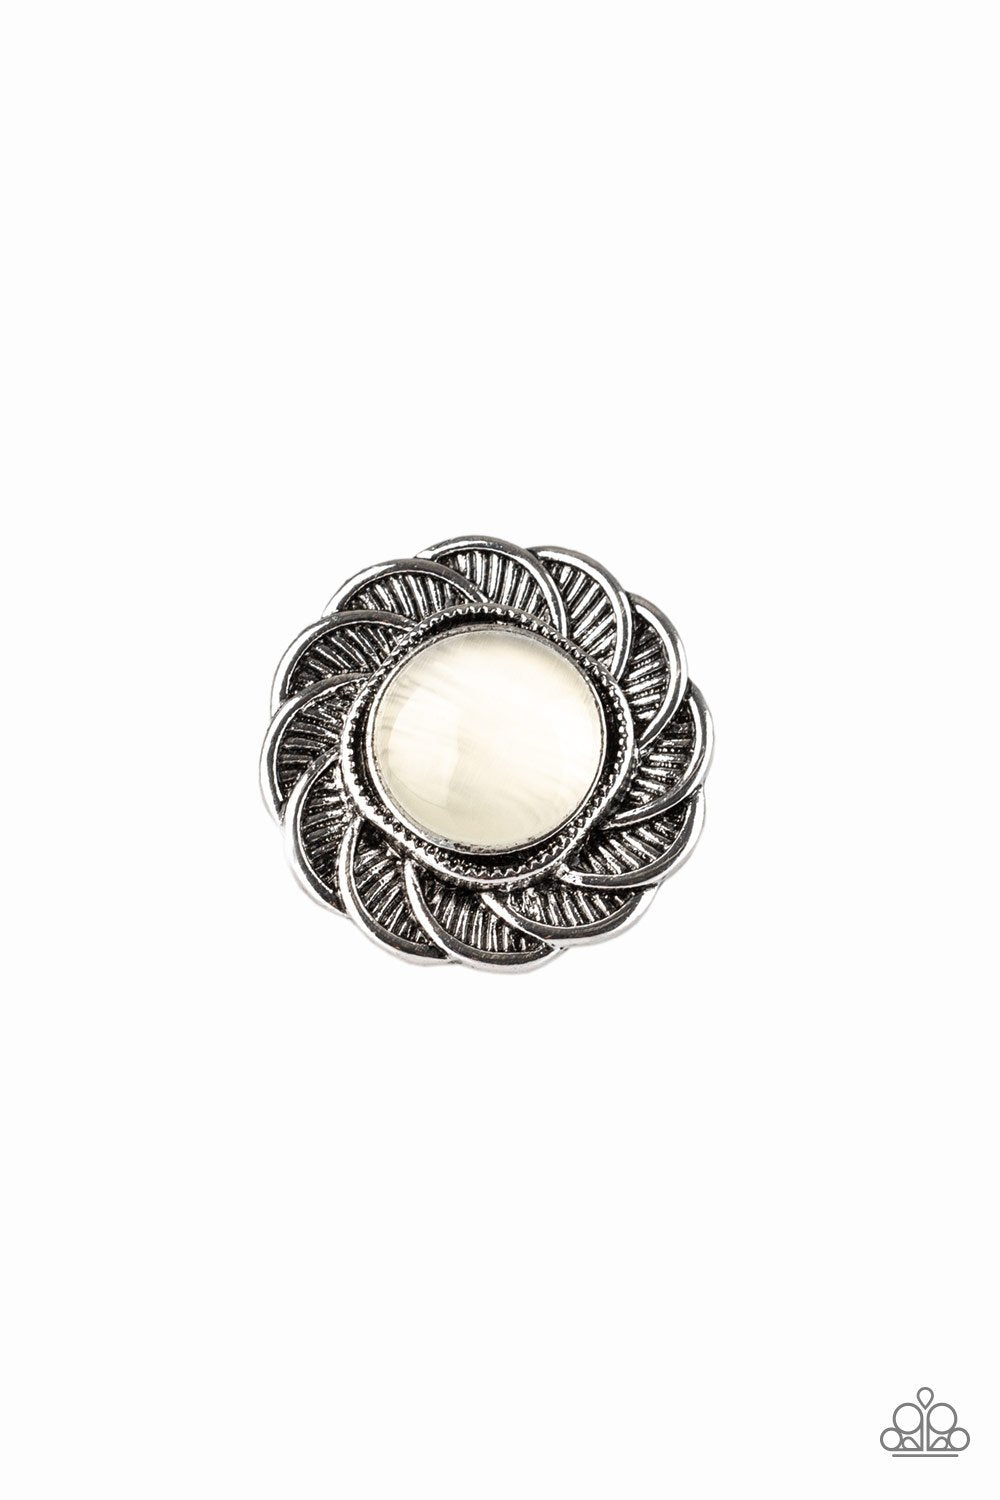 Gardenia Glow White Moonstone Flower Ring - Paparazzi Accessories-CarasShop.com - $5 Jewelry by Cara Jewels